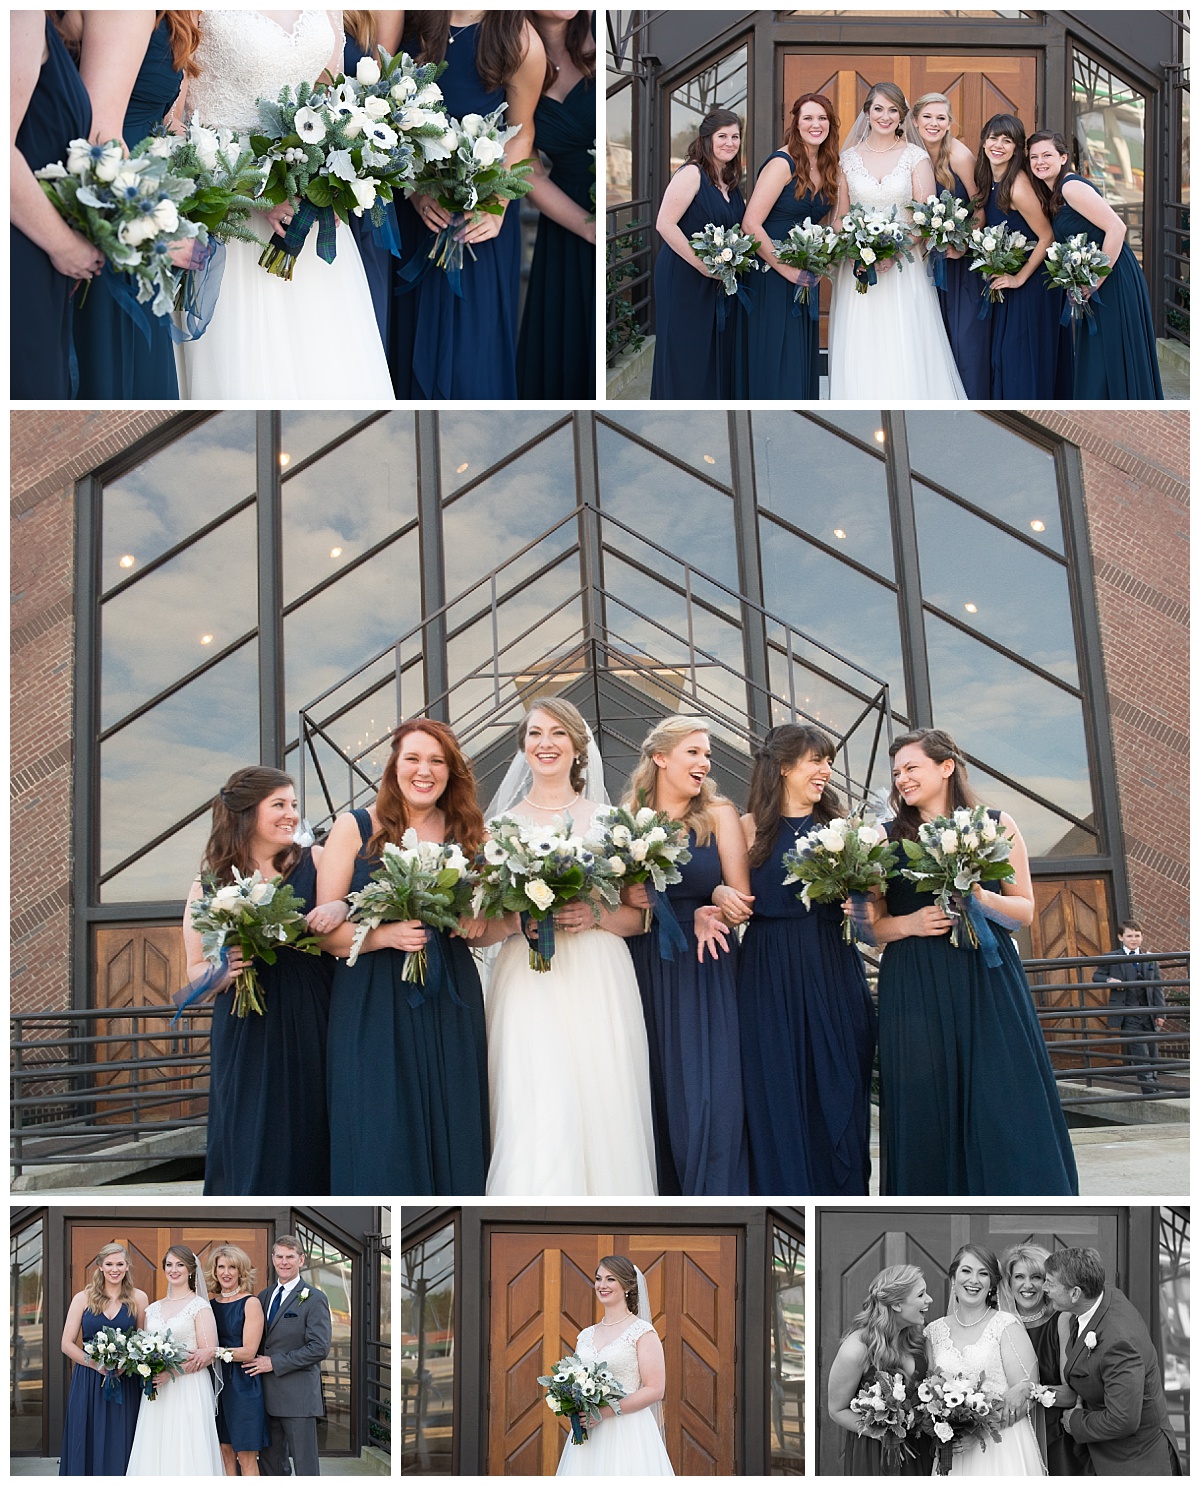 Blue bridesmaids gowns